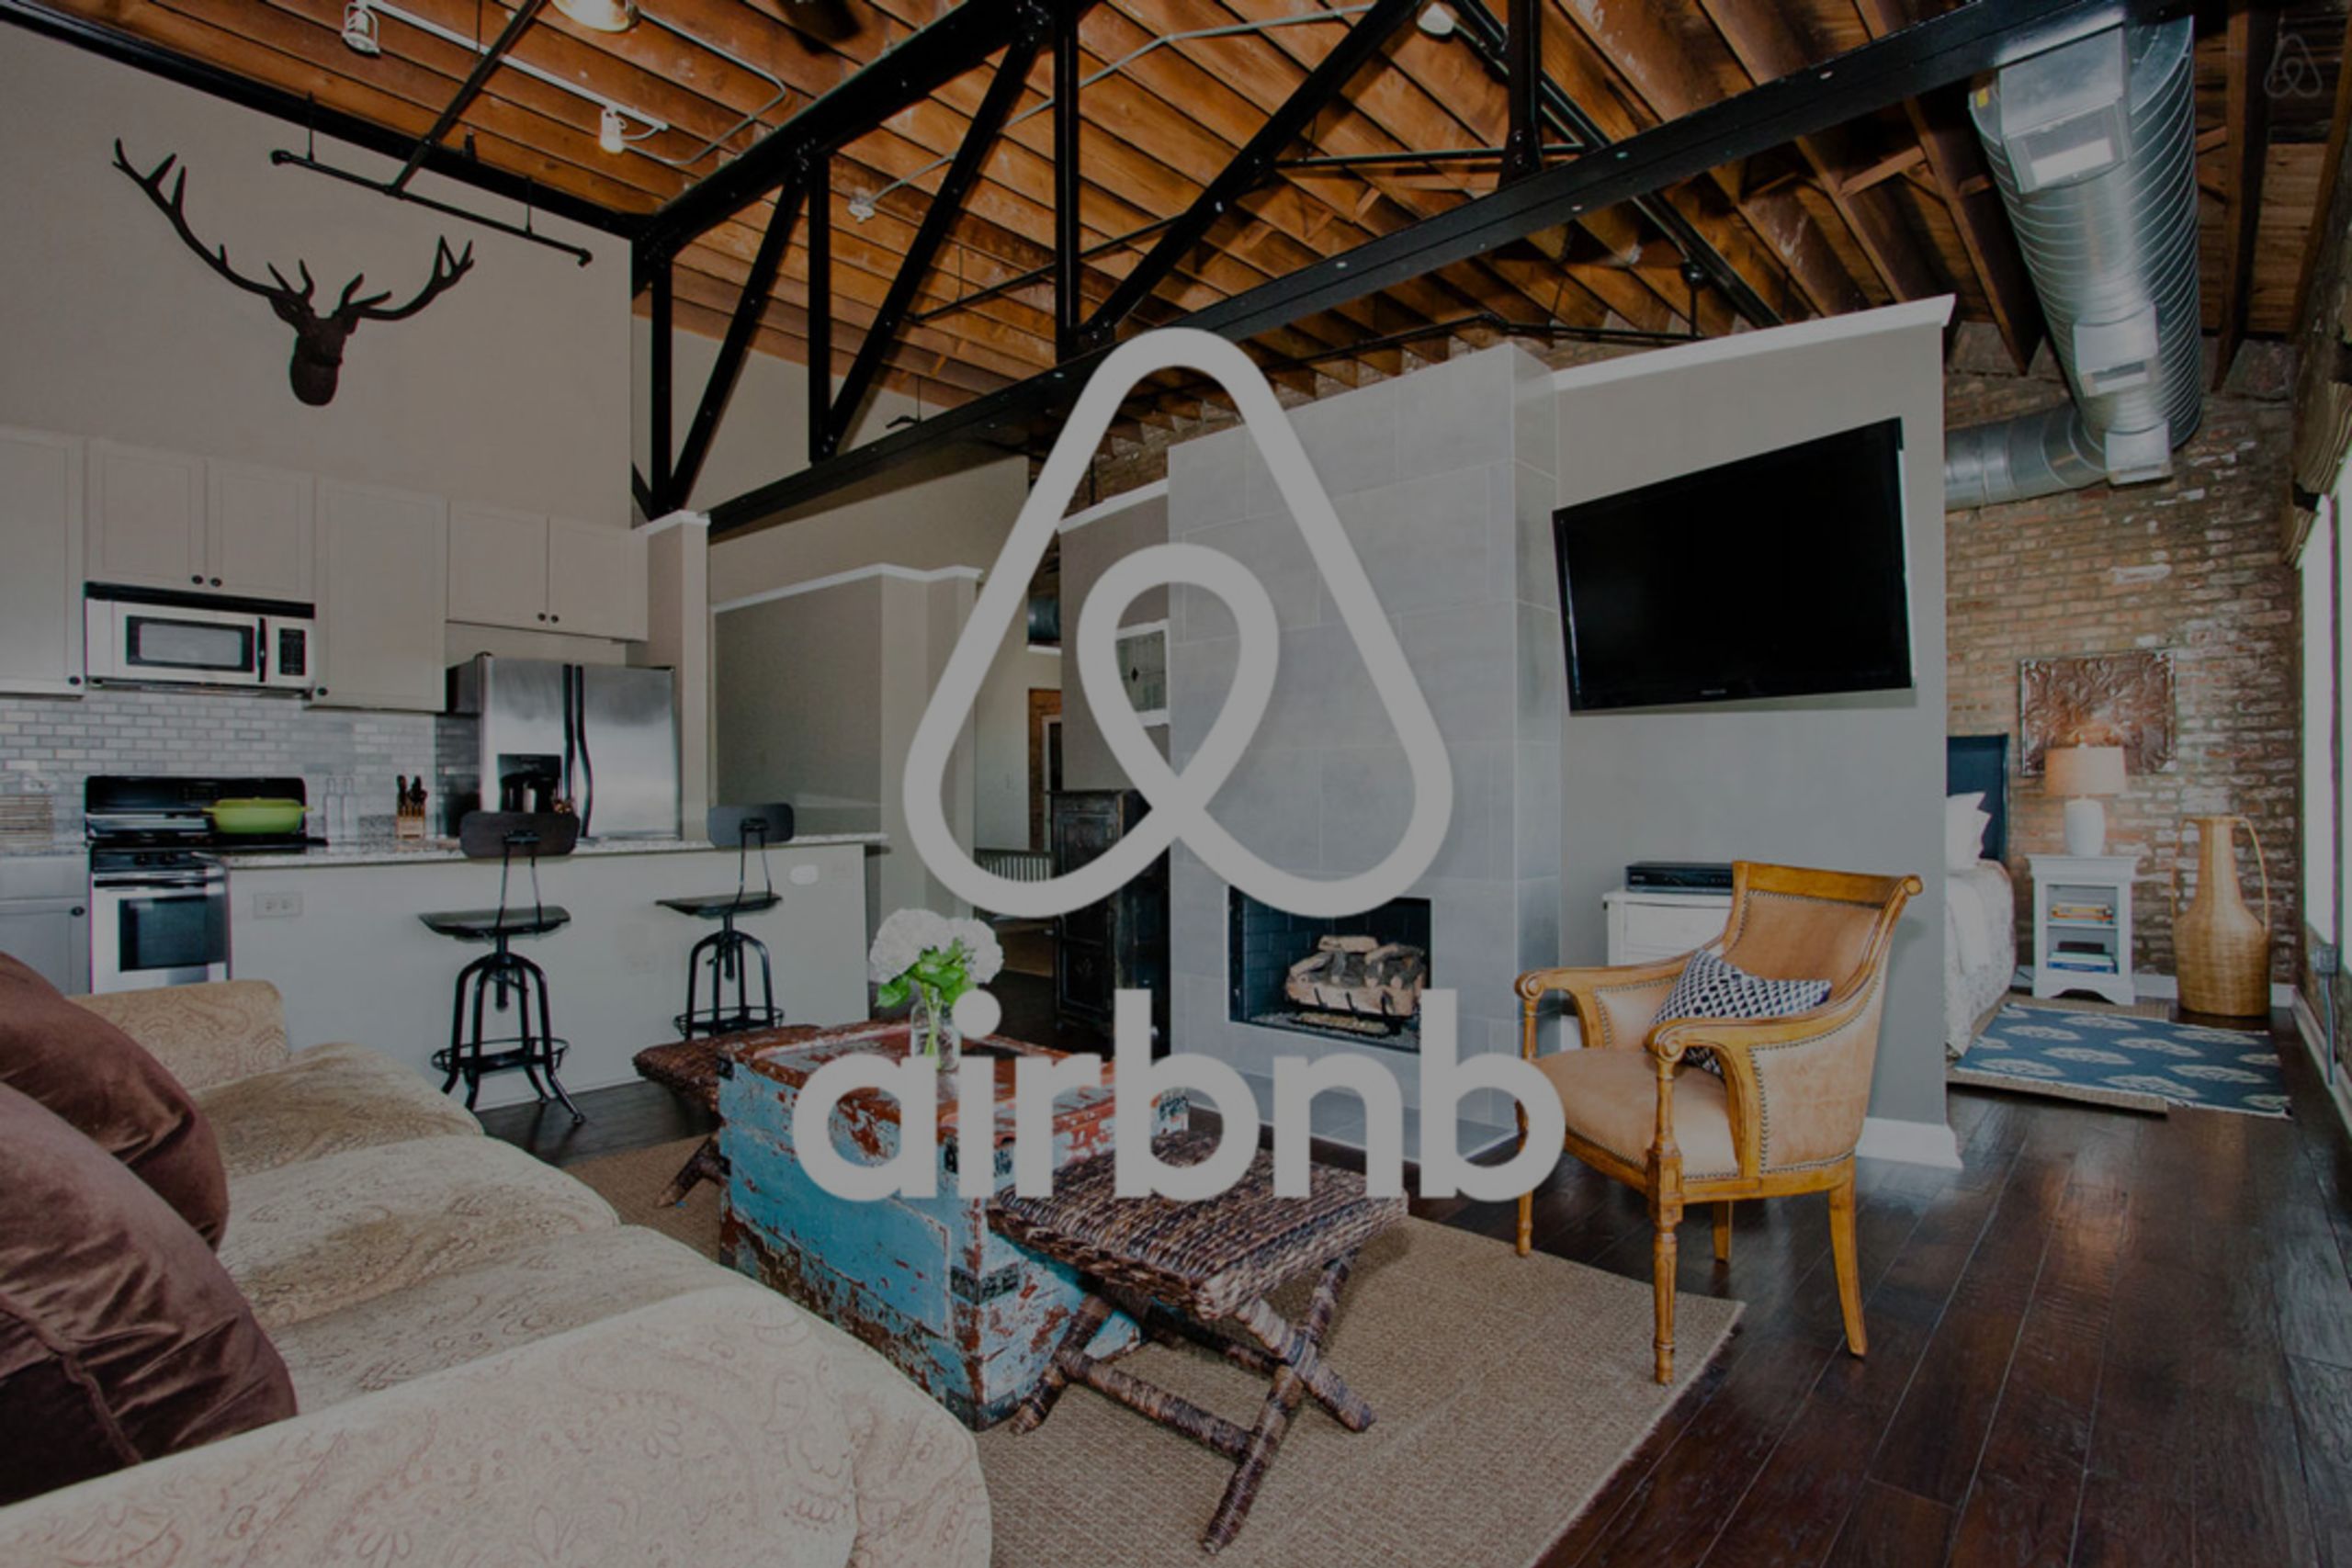 Airbnb sues its hometown over rental regulation